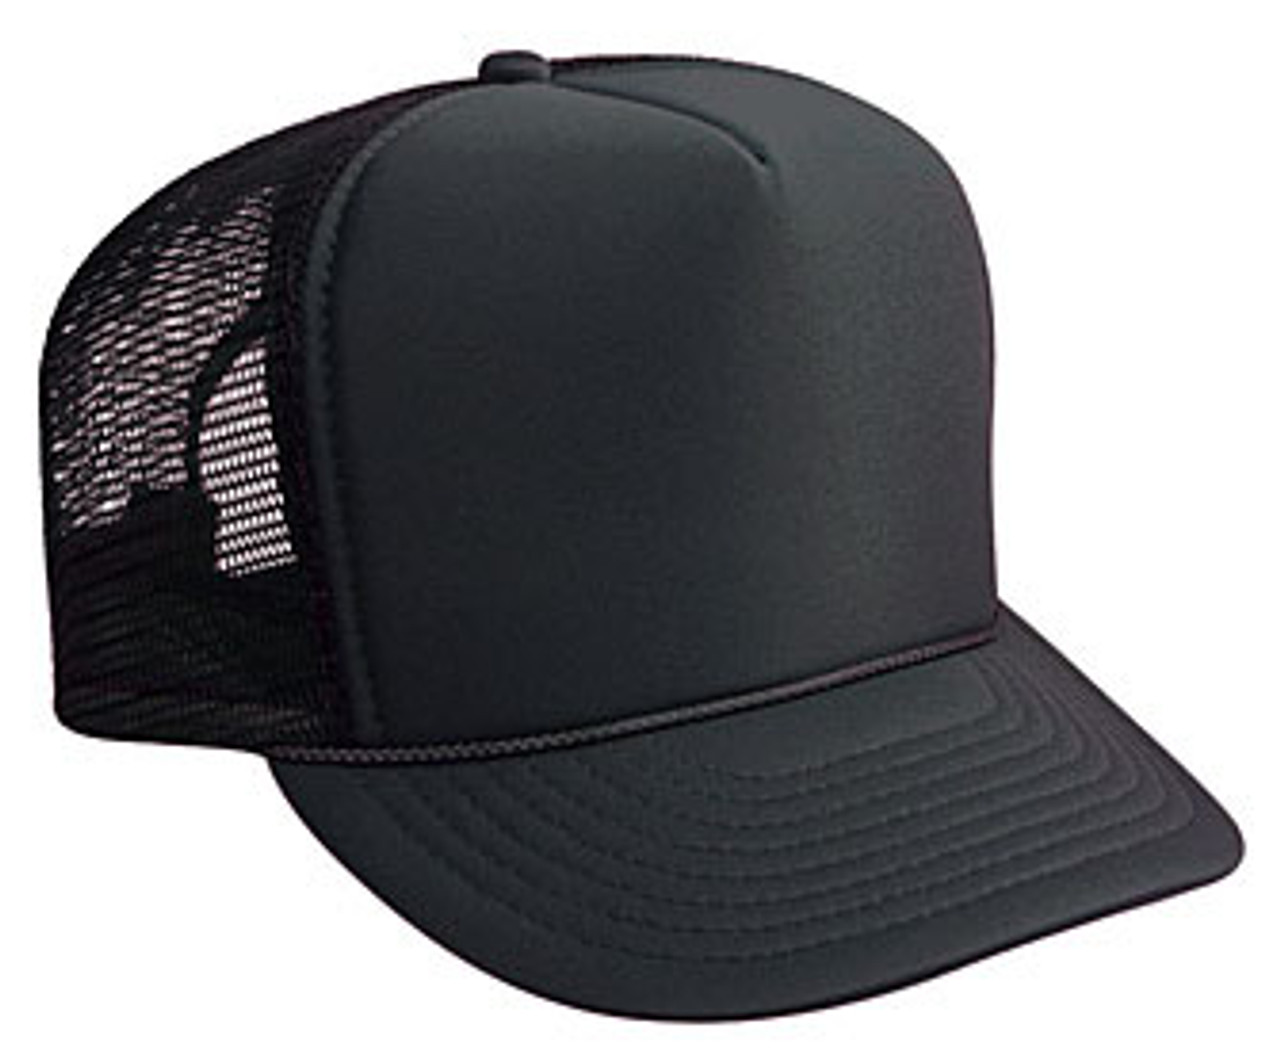 https://cdn11.bigcommerce.com/s-gocon9/images/stencil/1280x1280/products/426/582/solid-black-mesh-trucker-hat-mesh-hat-5__49948.1422907232.jpg?c=2